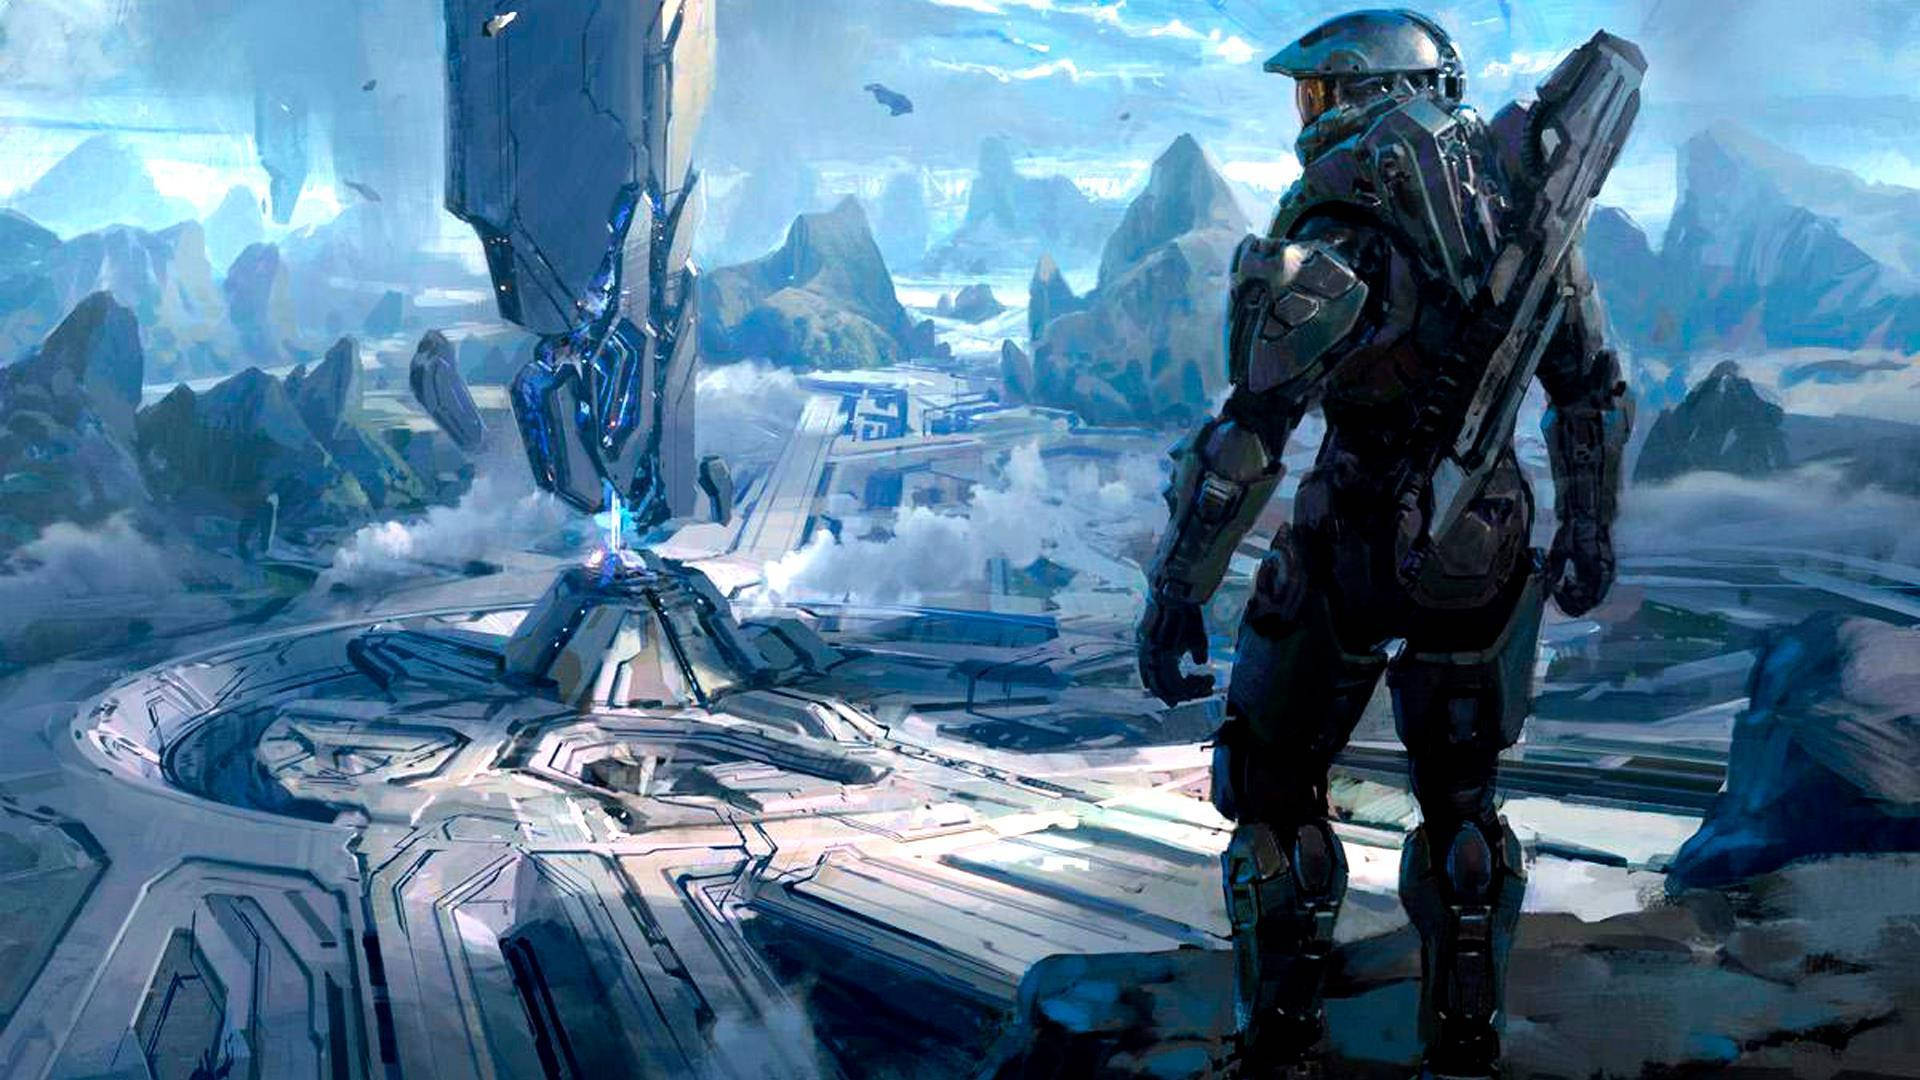 Halo 4 Futuristic City